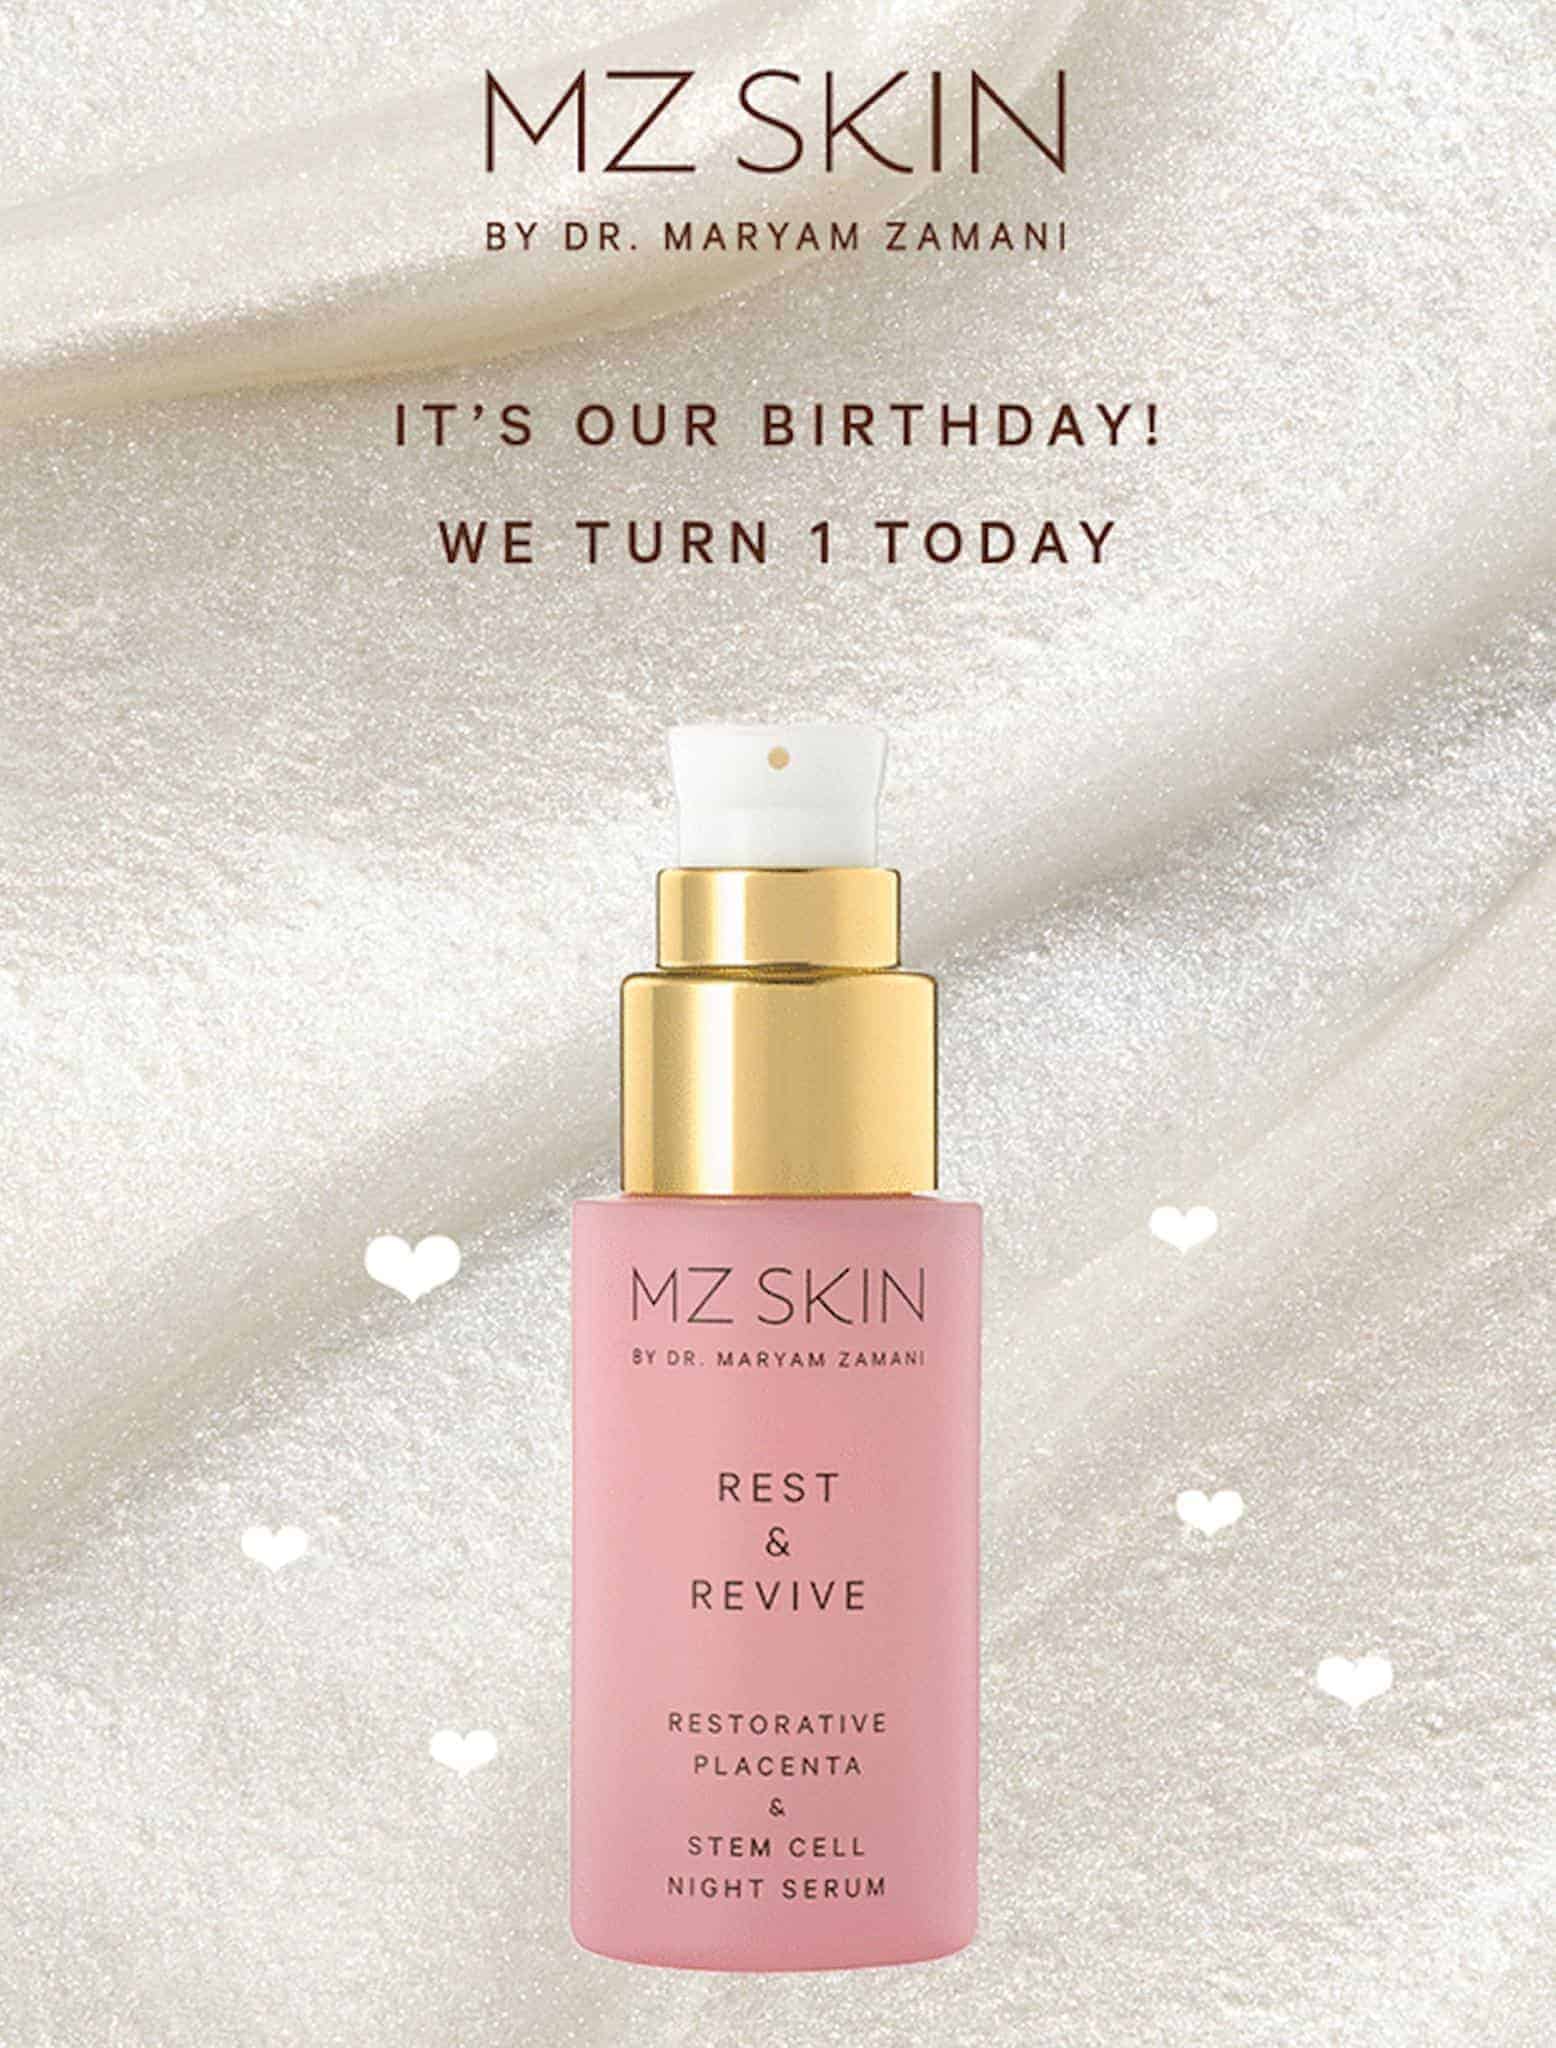 MZ Skin 2017 Birthday